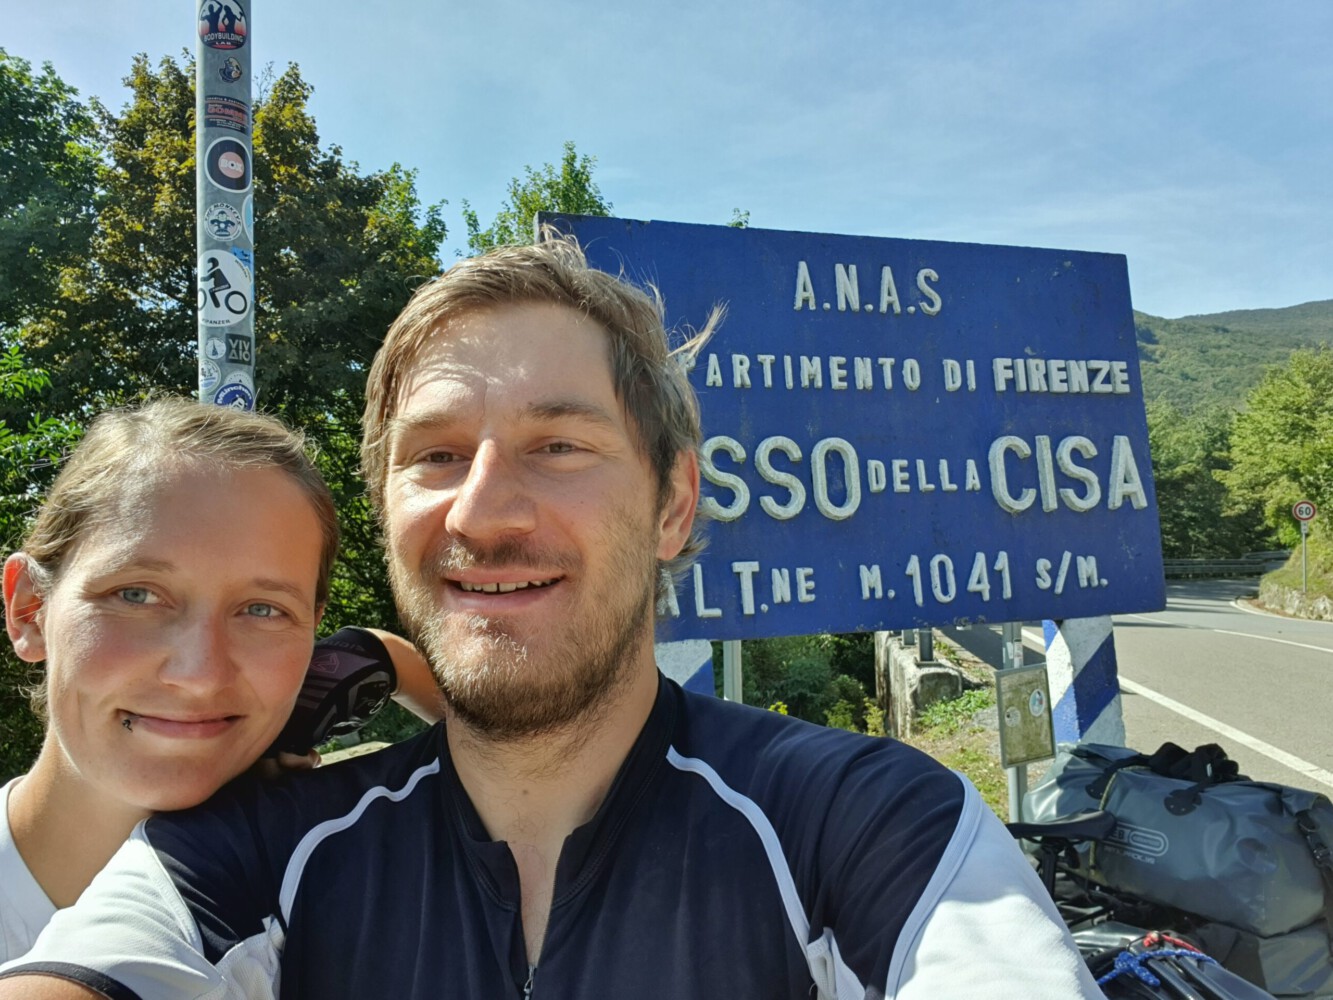 Selfie time - Passo della Cisa - 1041 meter!